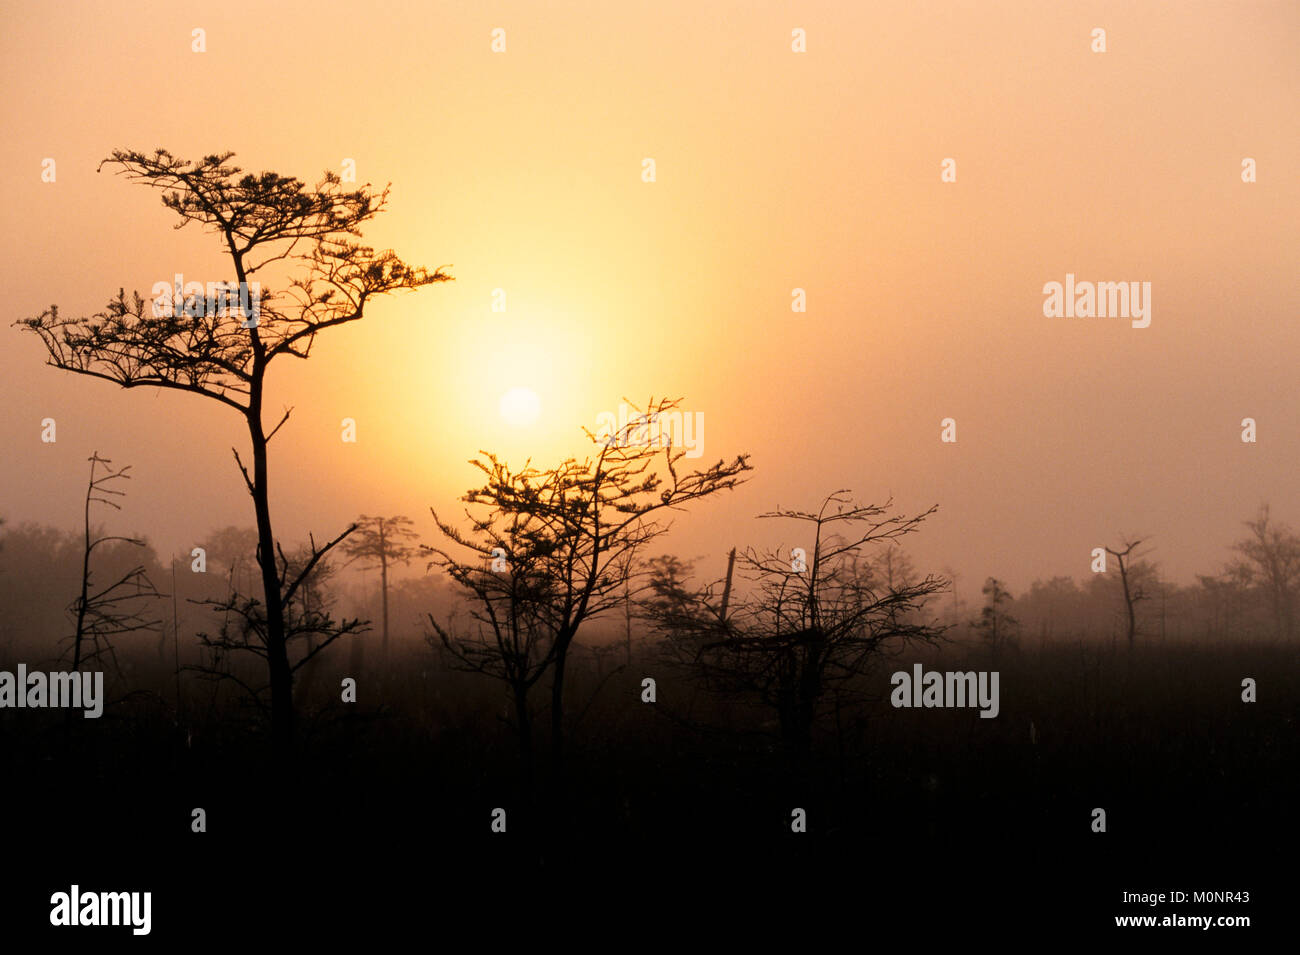 Cipresso calvo nella nebbia di sunrise, Everglades National Park, Florida, Stati Uniti d'America / (Taxodium distichum) | Echte Sumpfzypressen im Nebel Bei Sonnenaufgang Foto Stock